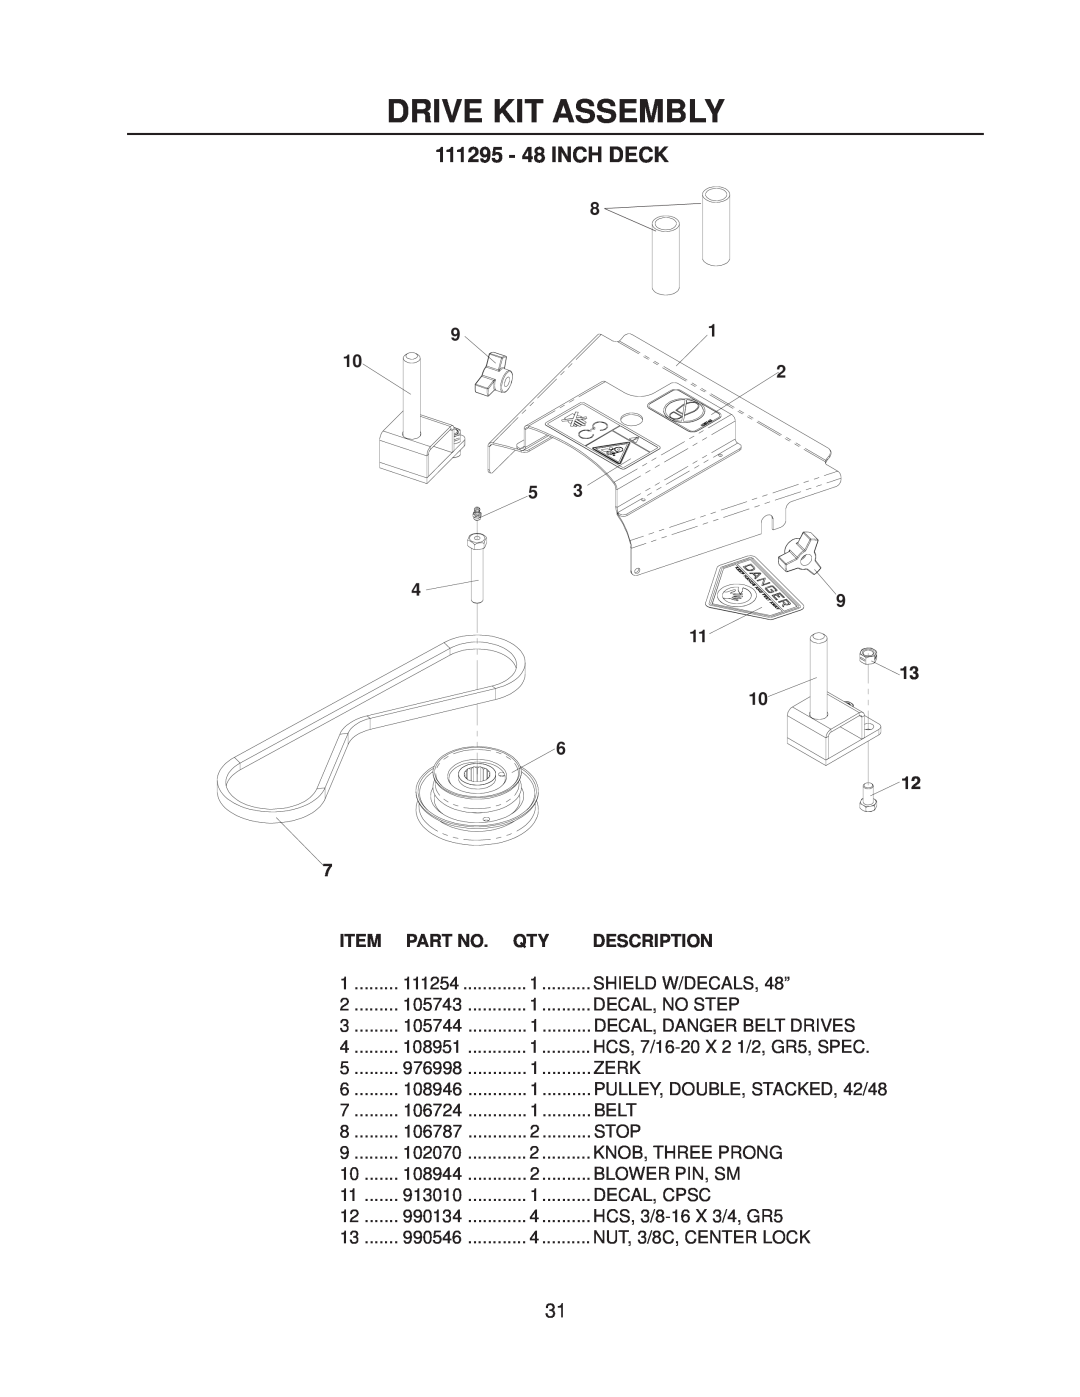 Yazoo/Kees CS13, CS9 manual Drive Kit Assembly, 111295 - 48 INCH DECK, Description 